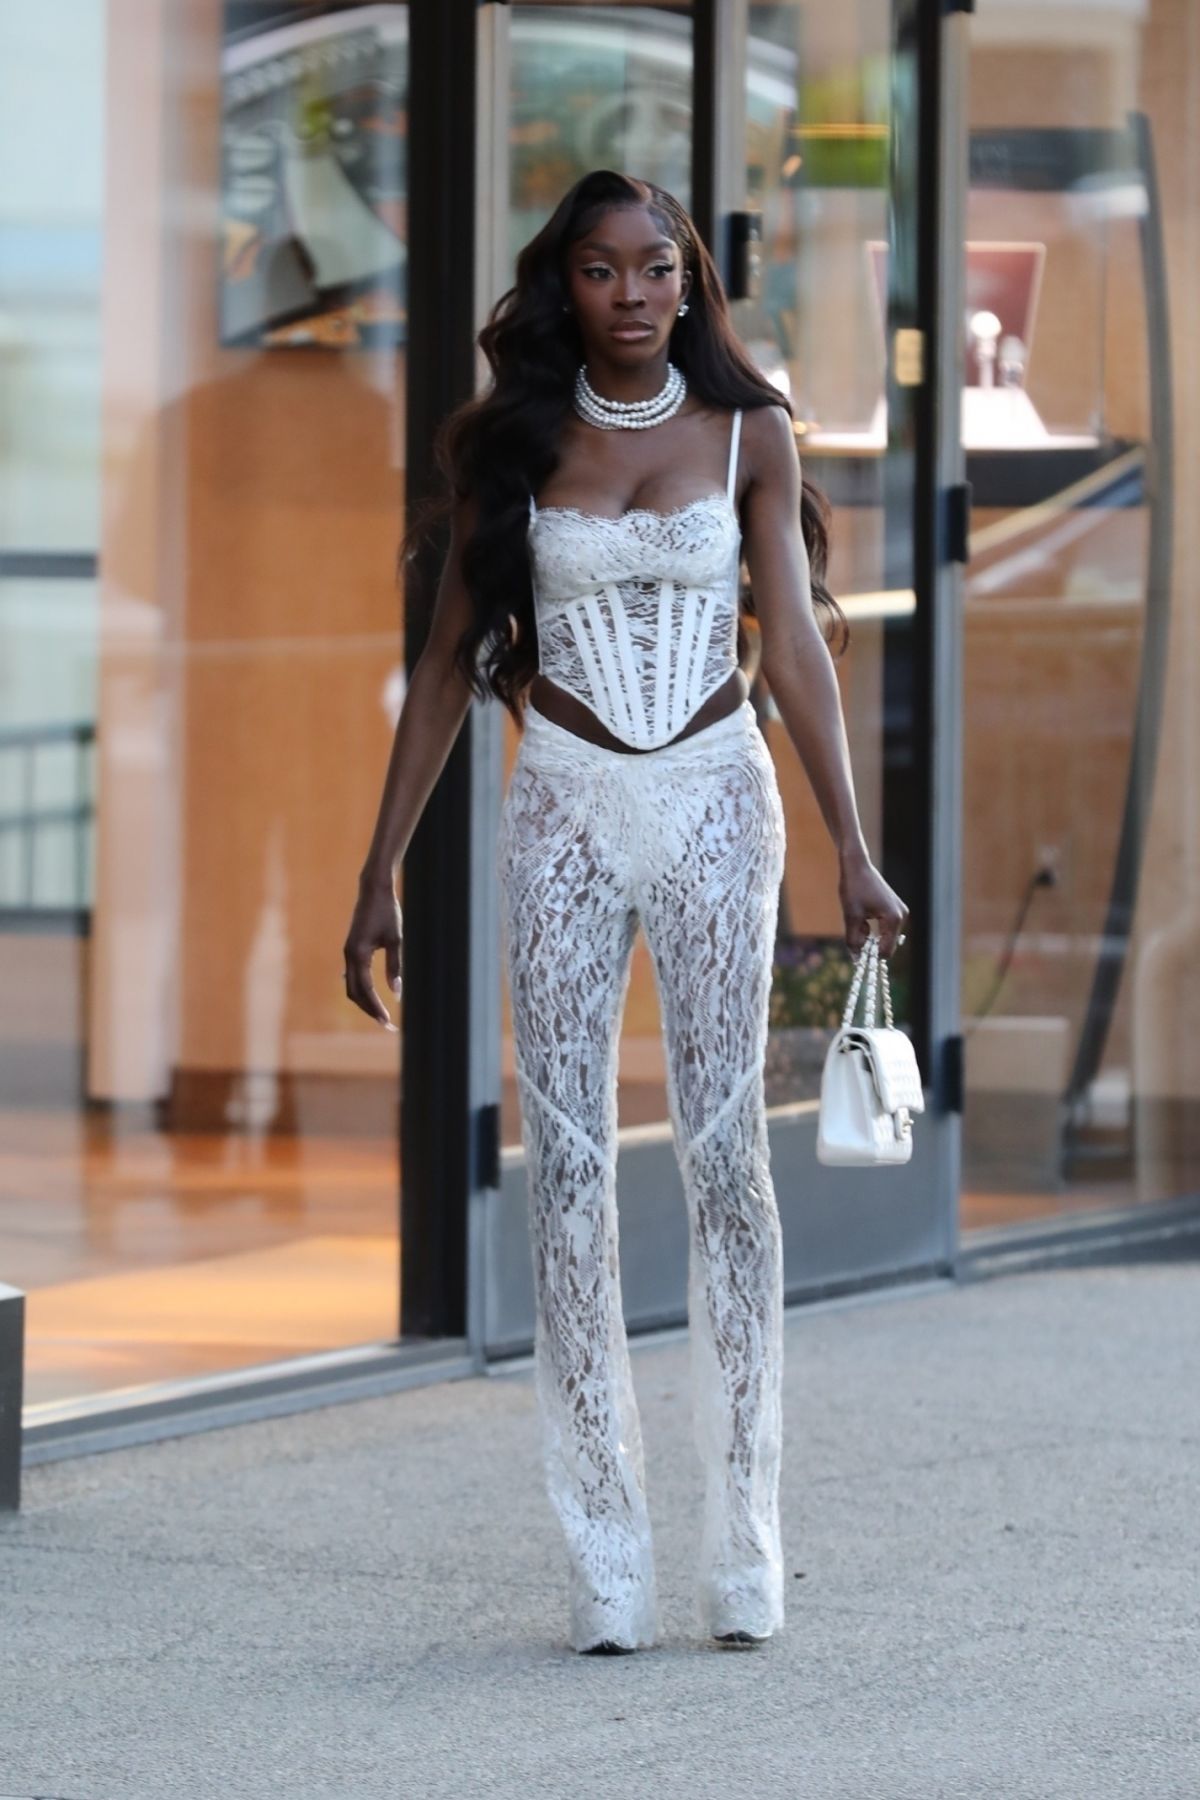 WornOnTV: Chelsea's white lace corset top and pants on Selling Sunset, Chelsea Lazkani